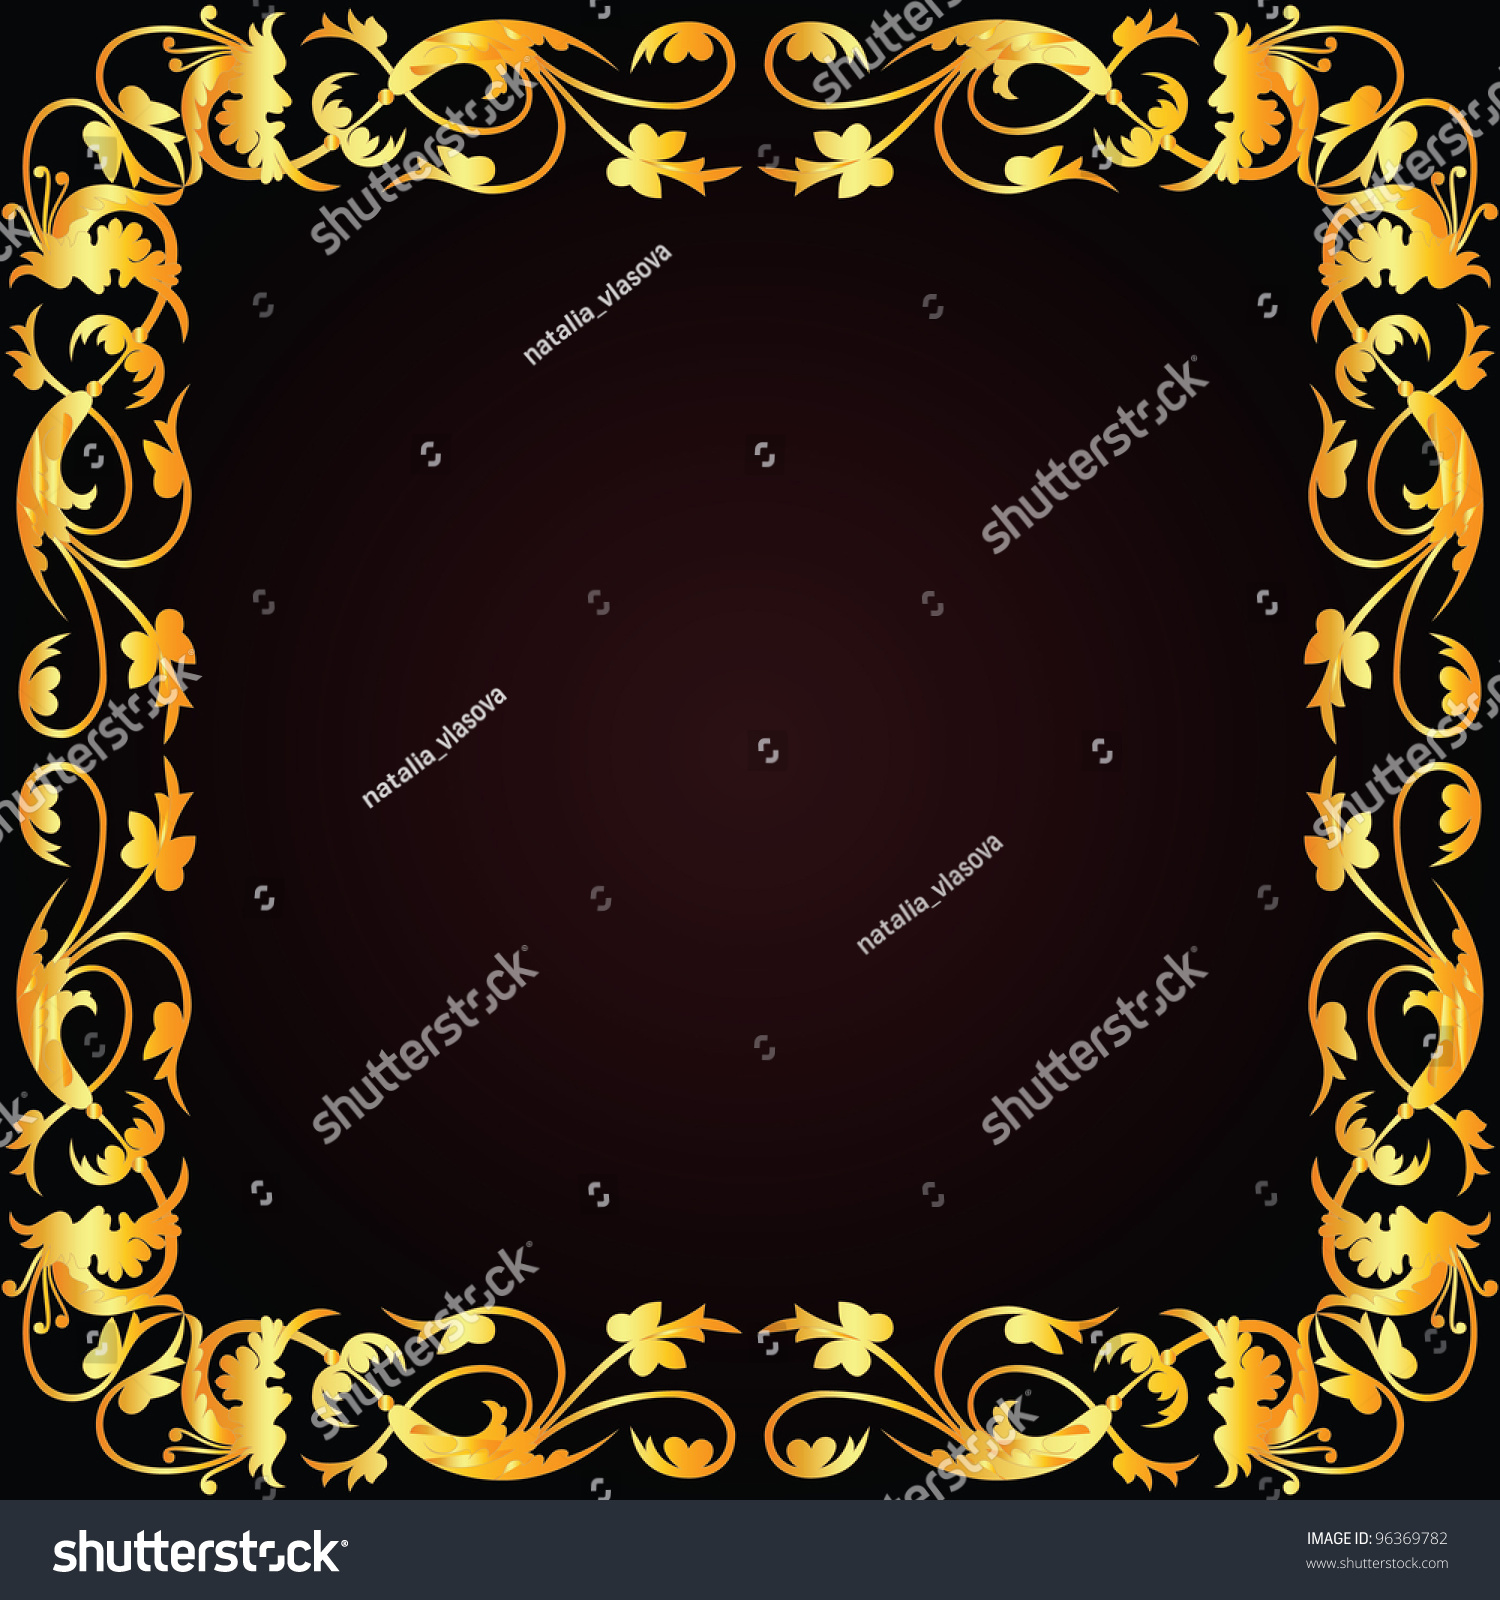 Elegant Black And Gold Background Stock Vector Illustration 96369782 : Shutterstock